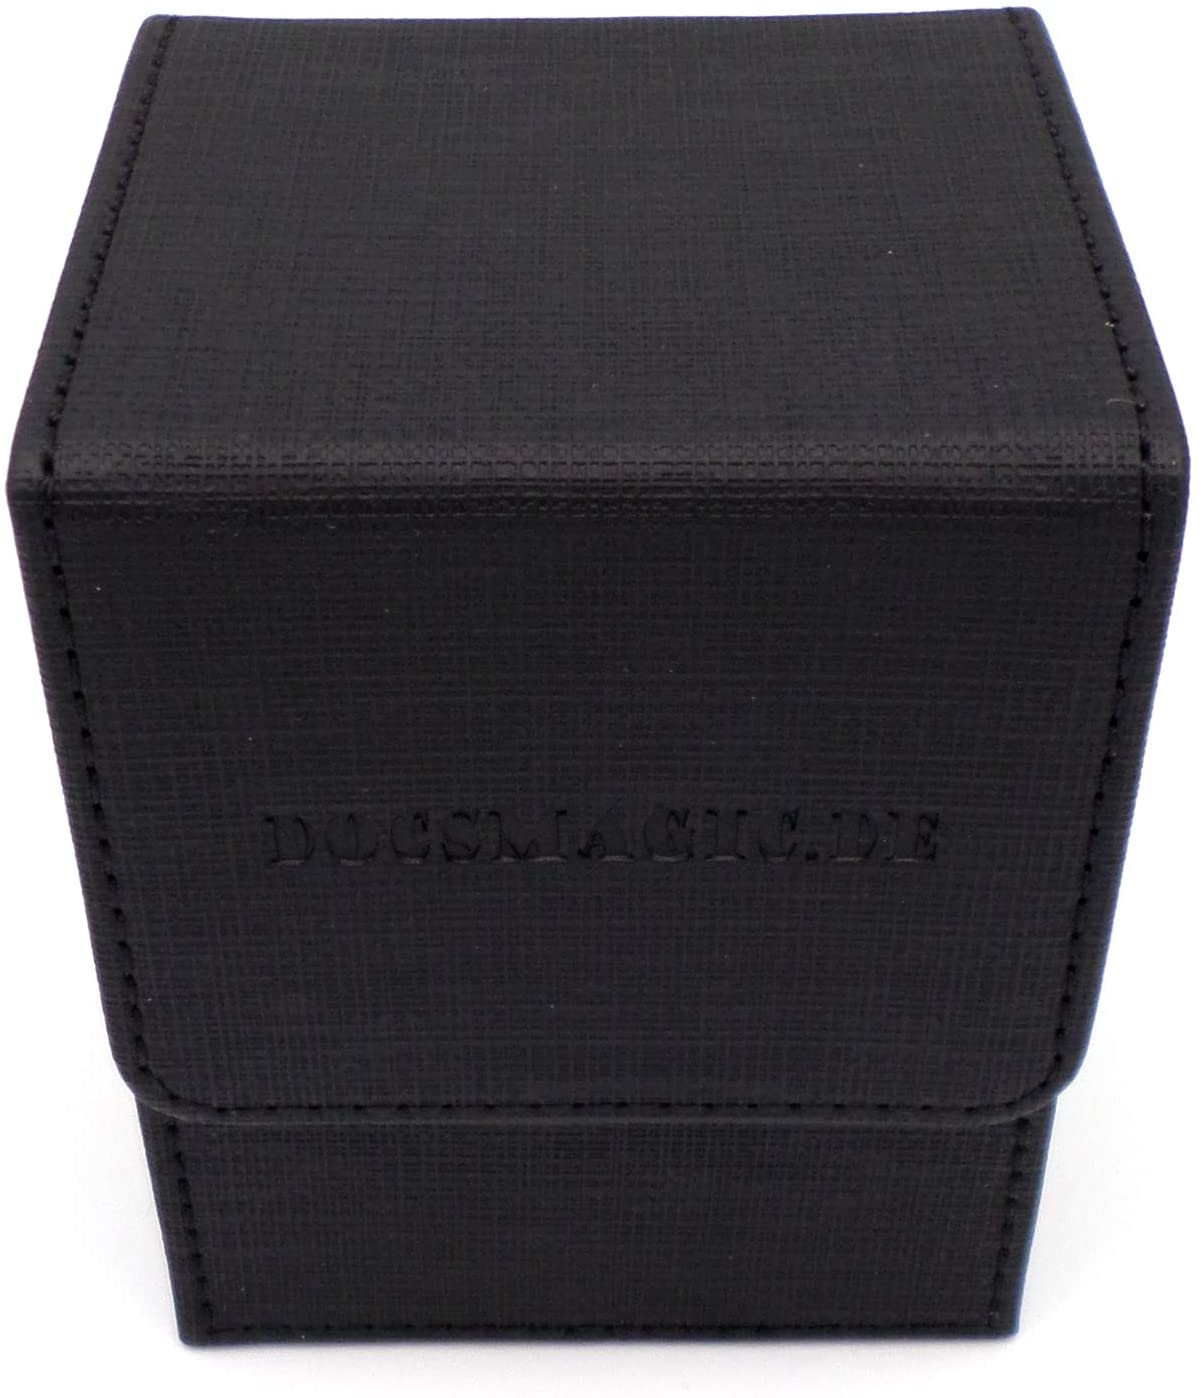 100 YG PKM Deck Divider MTG Black Docsmagic.de Premium Magnetic Tray Box 